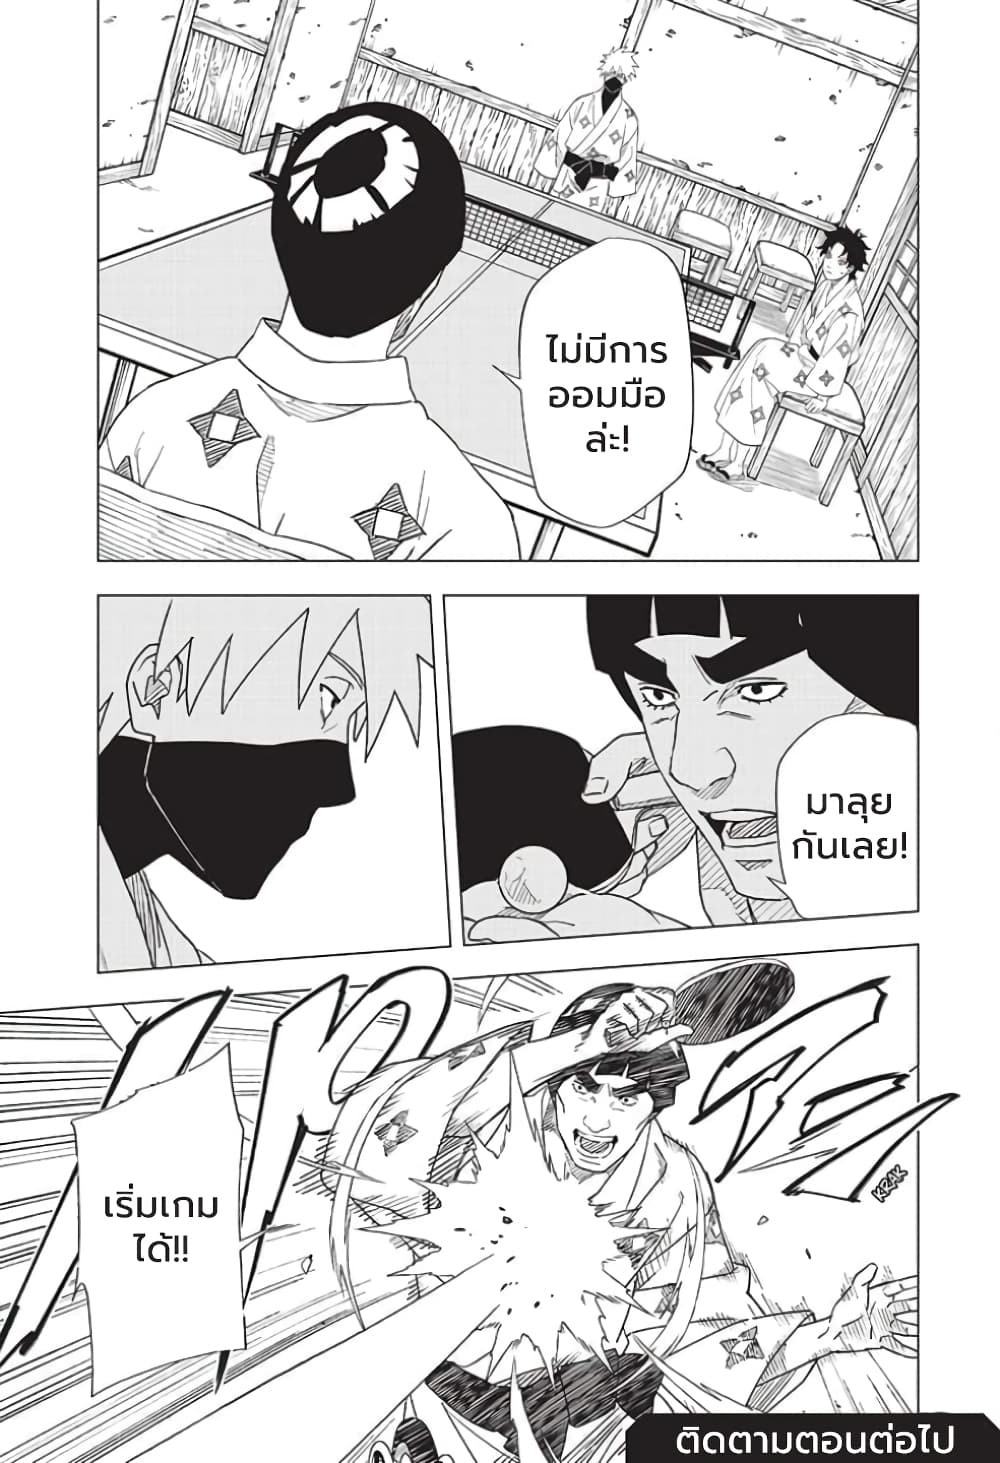 Naruto Konoha’s Story – The Steam Ninja Scrolls The Manga ตอนที่ 7 (17)